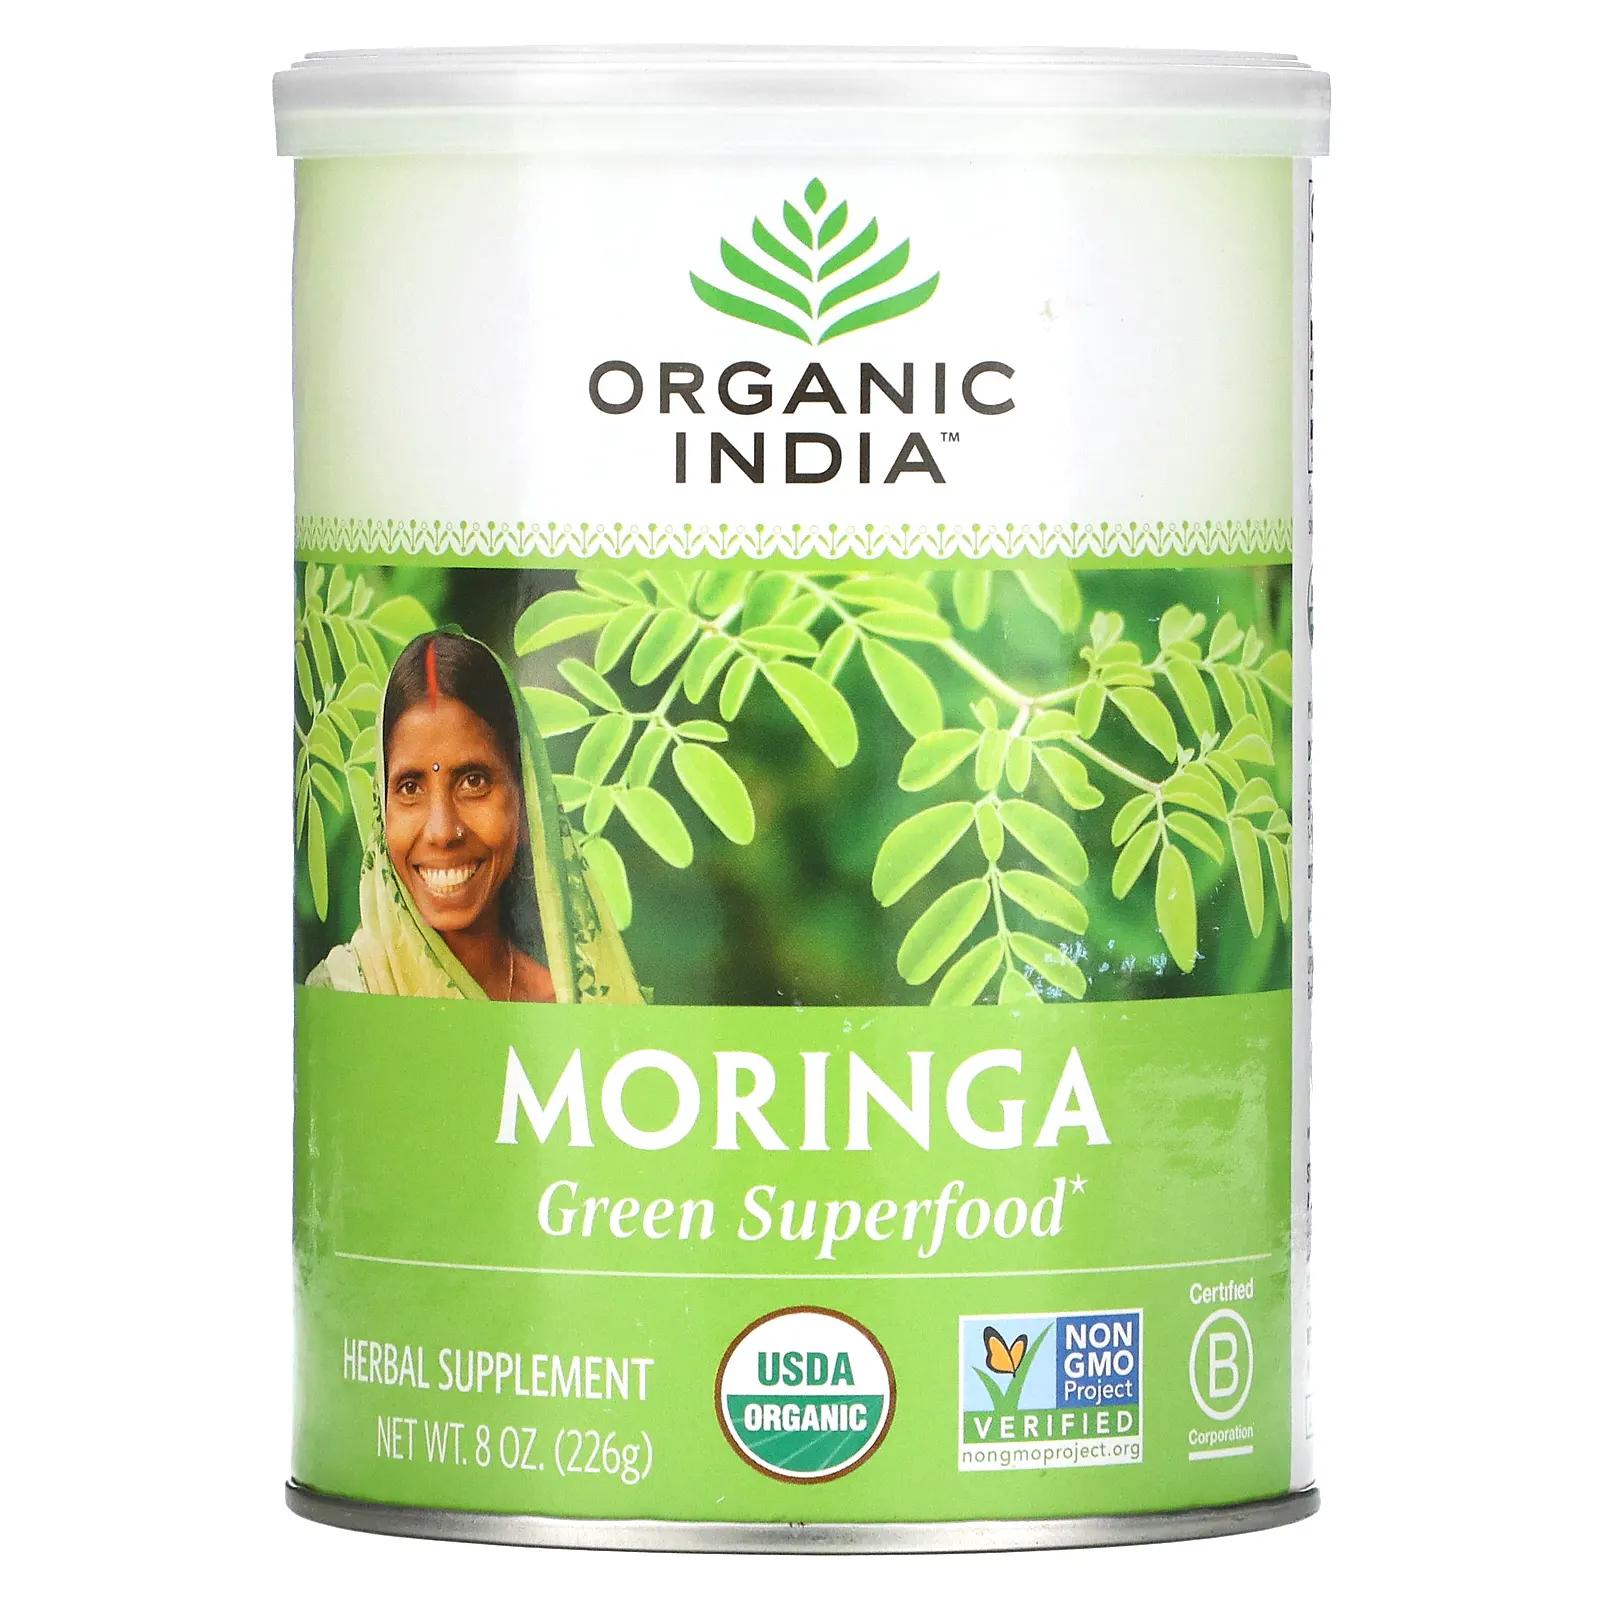 Organic India Порошок листов органической моринги 8 унц. (226 г) organic india amla 90 vegetarian caps